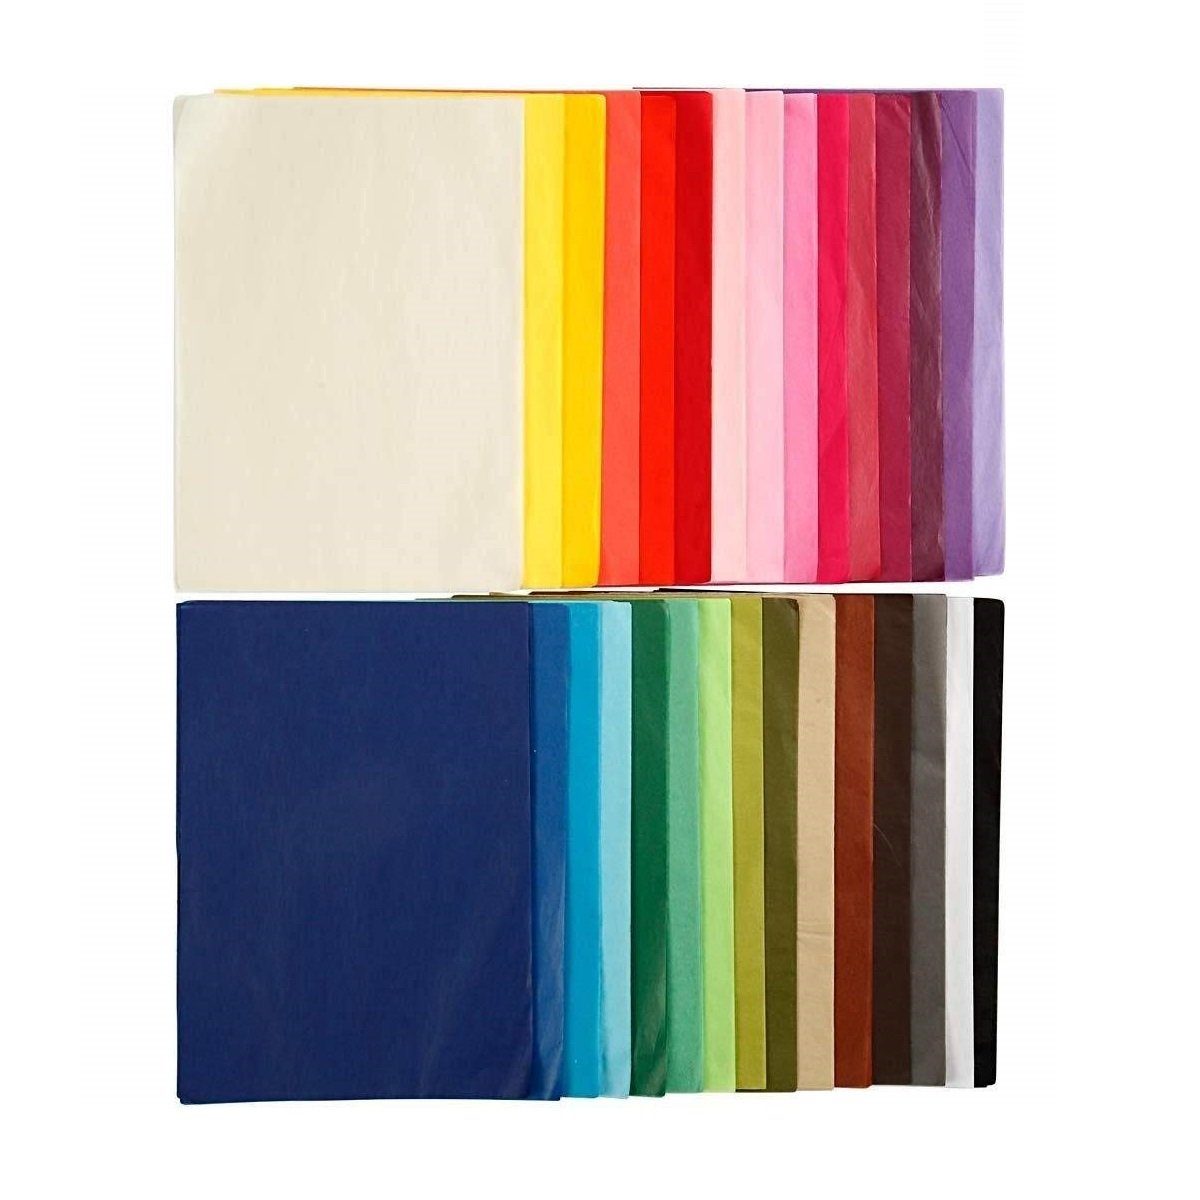 creativ company Pro -, verschiedenen mit 30 Farben Blatt Seidenpapier - 20914, 300 Blatt 10 Seidenpapier Transparentes Farbe